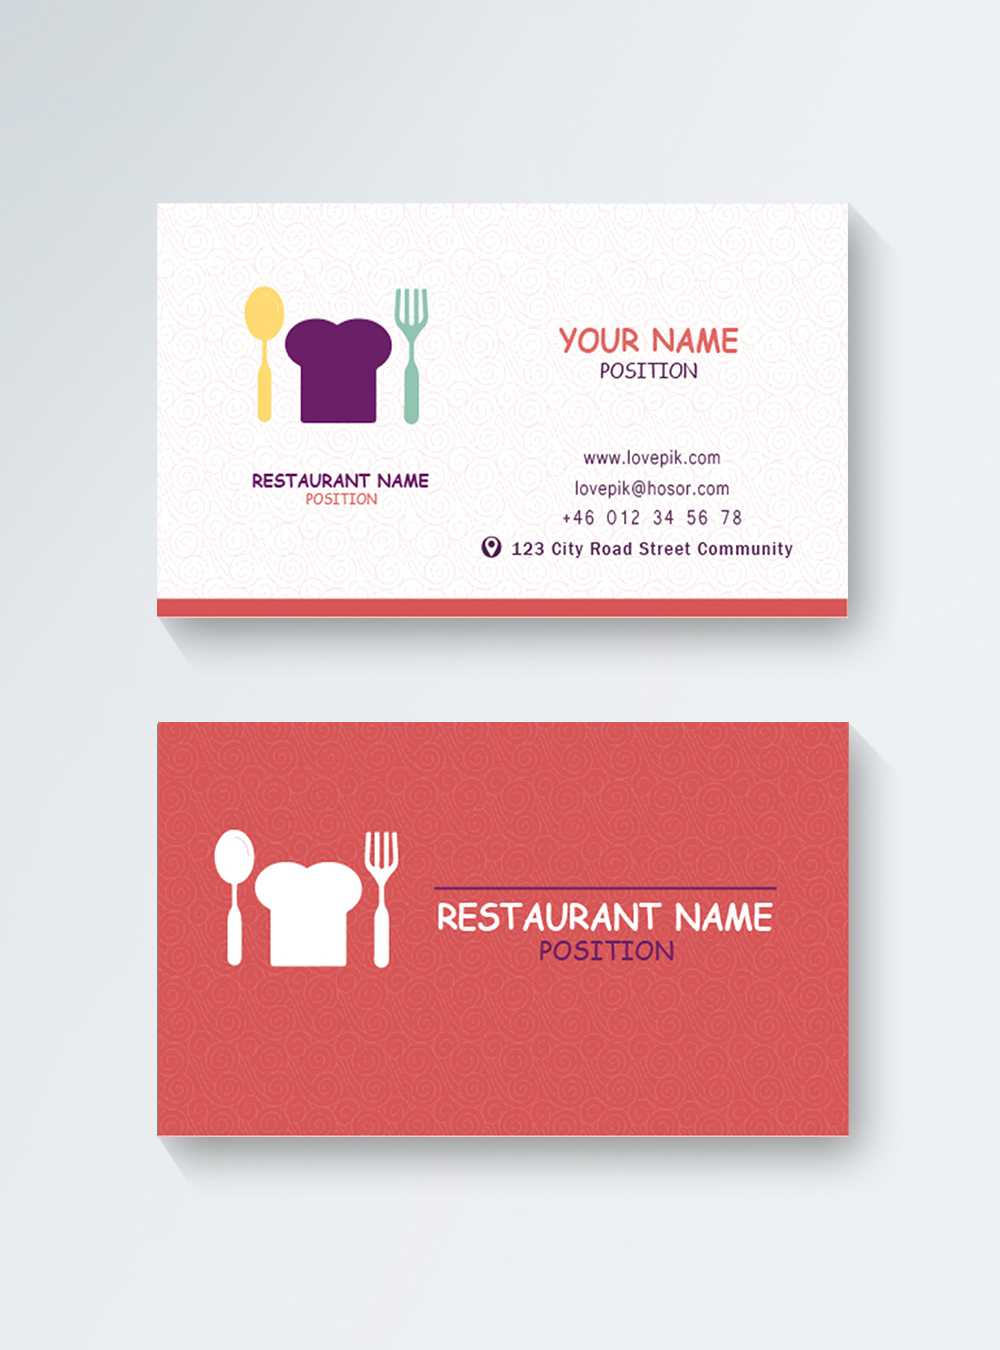 Leisure Restaurant Food Business Card Template Image Picture For Food Business Cards Templates Free